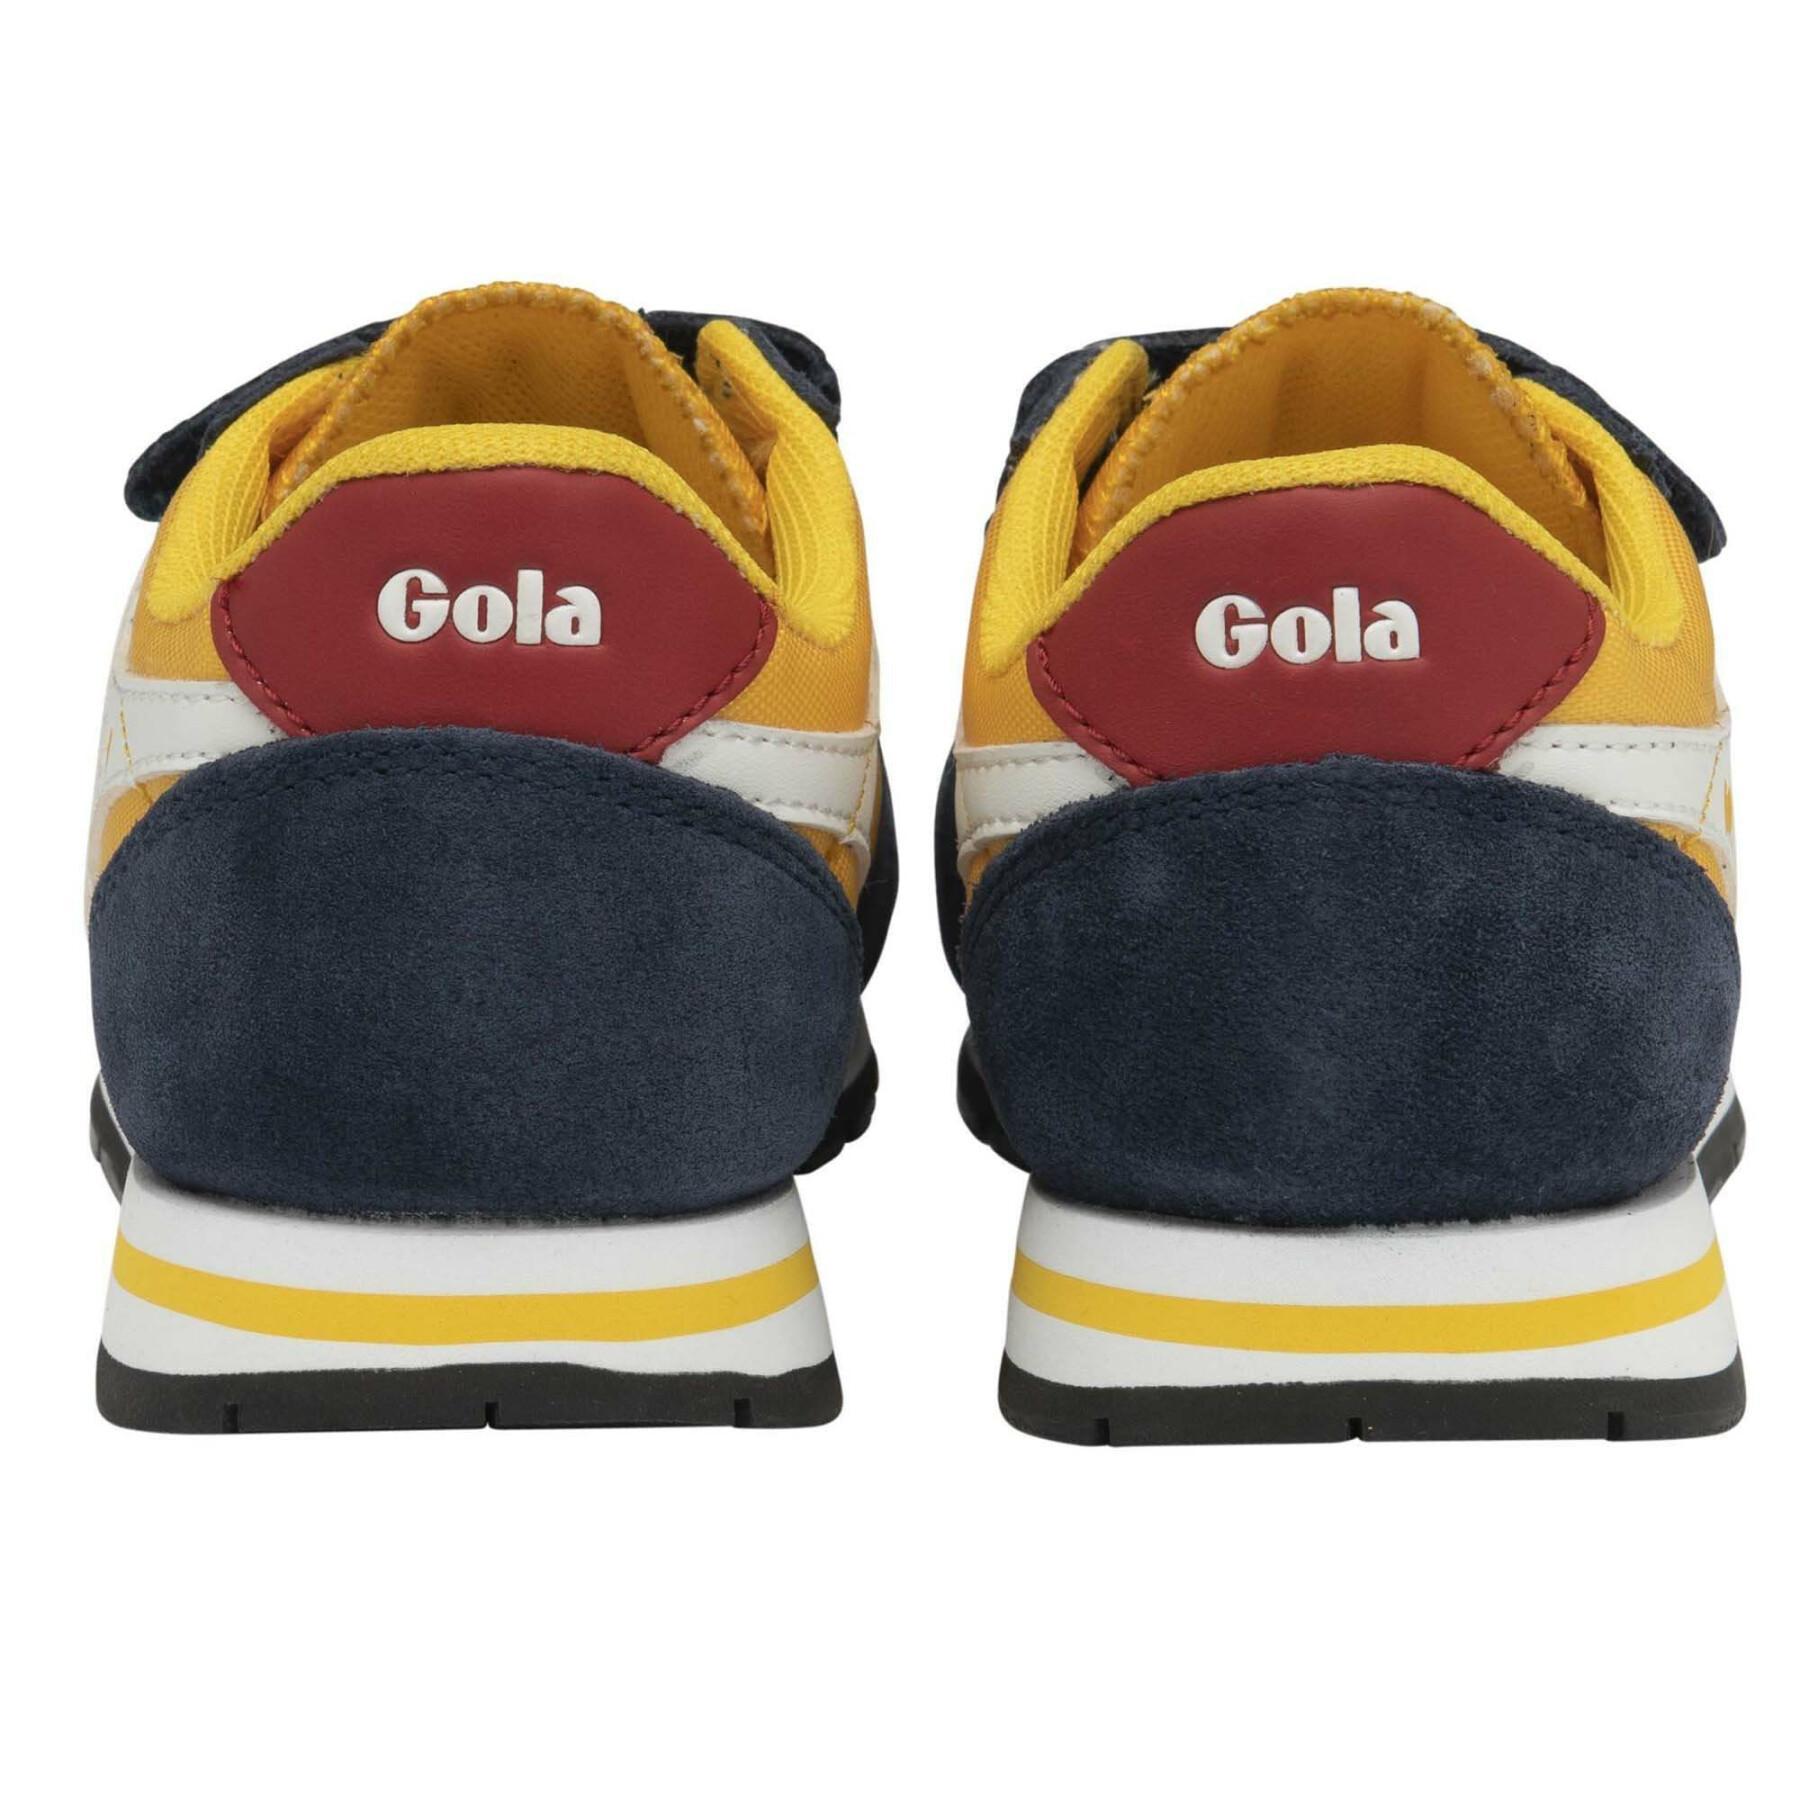 Children's sneakers Gola Daytona Strap